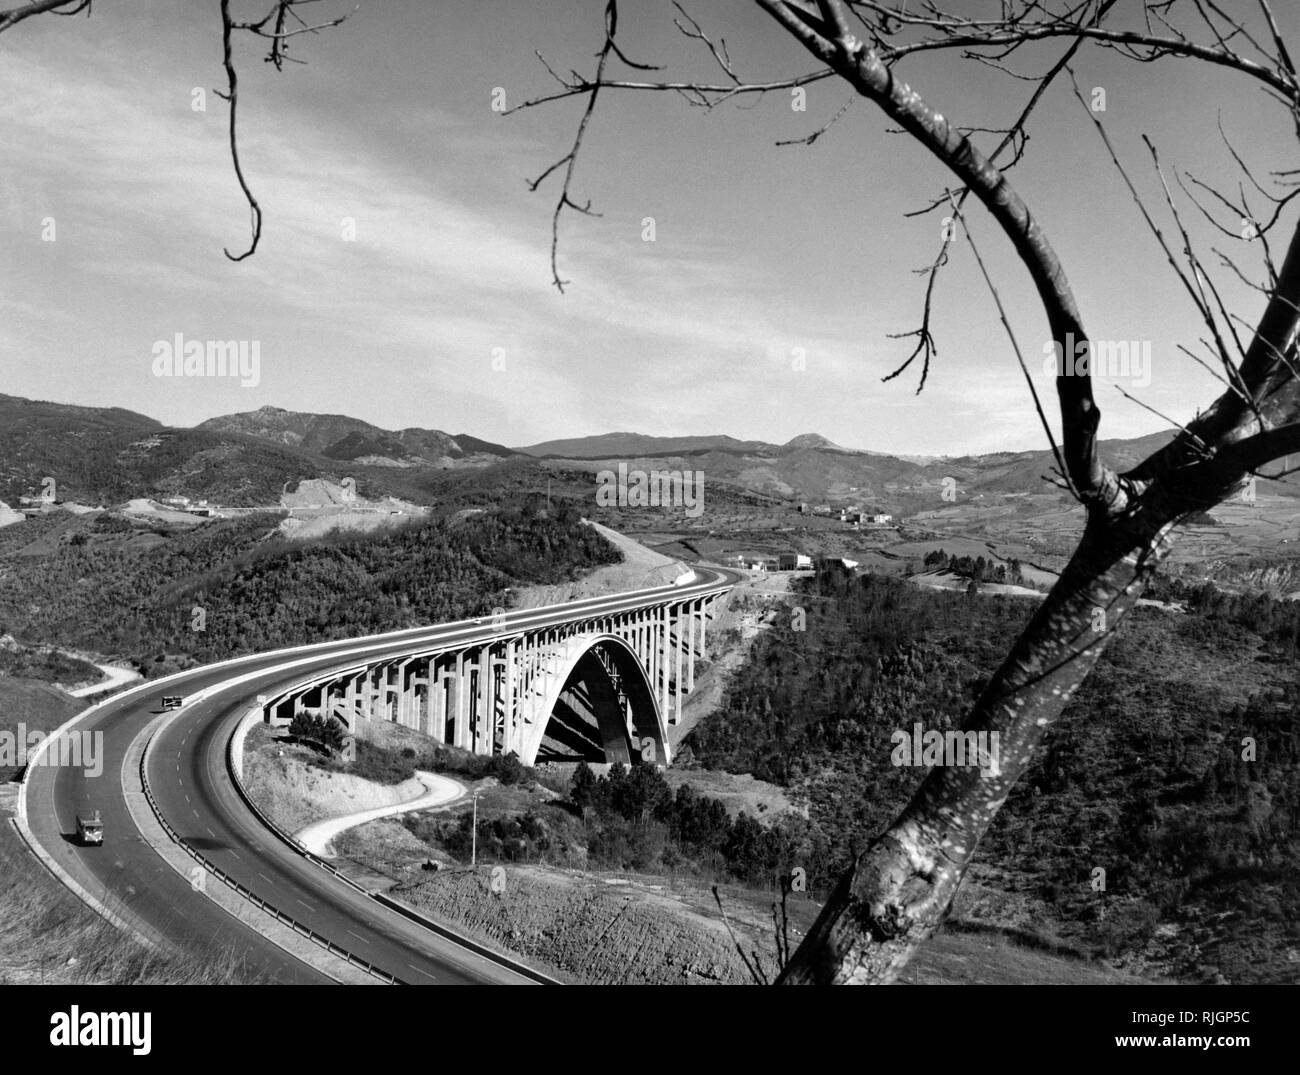 L'autostrada del sole, Bologne-Firenze, 1960 Banque D'Images